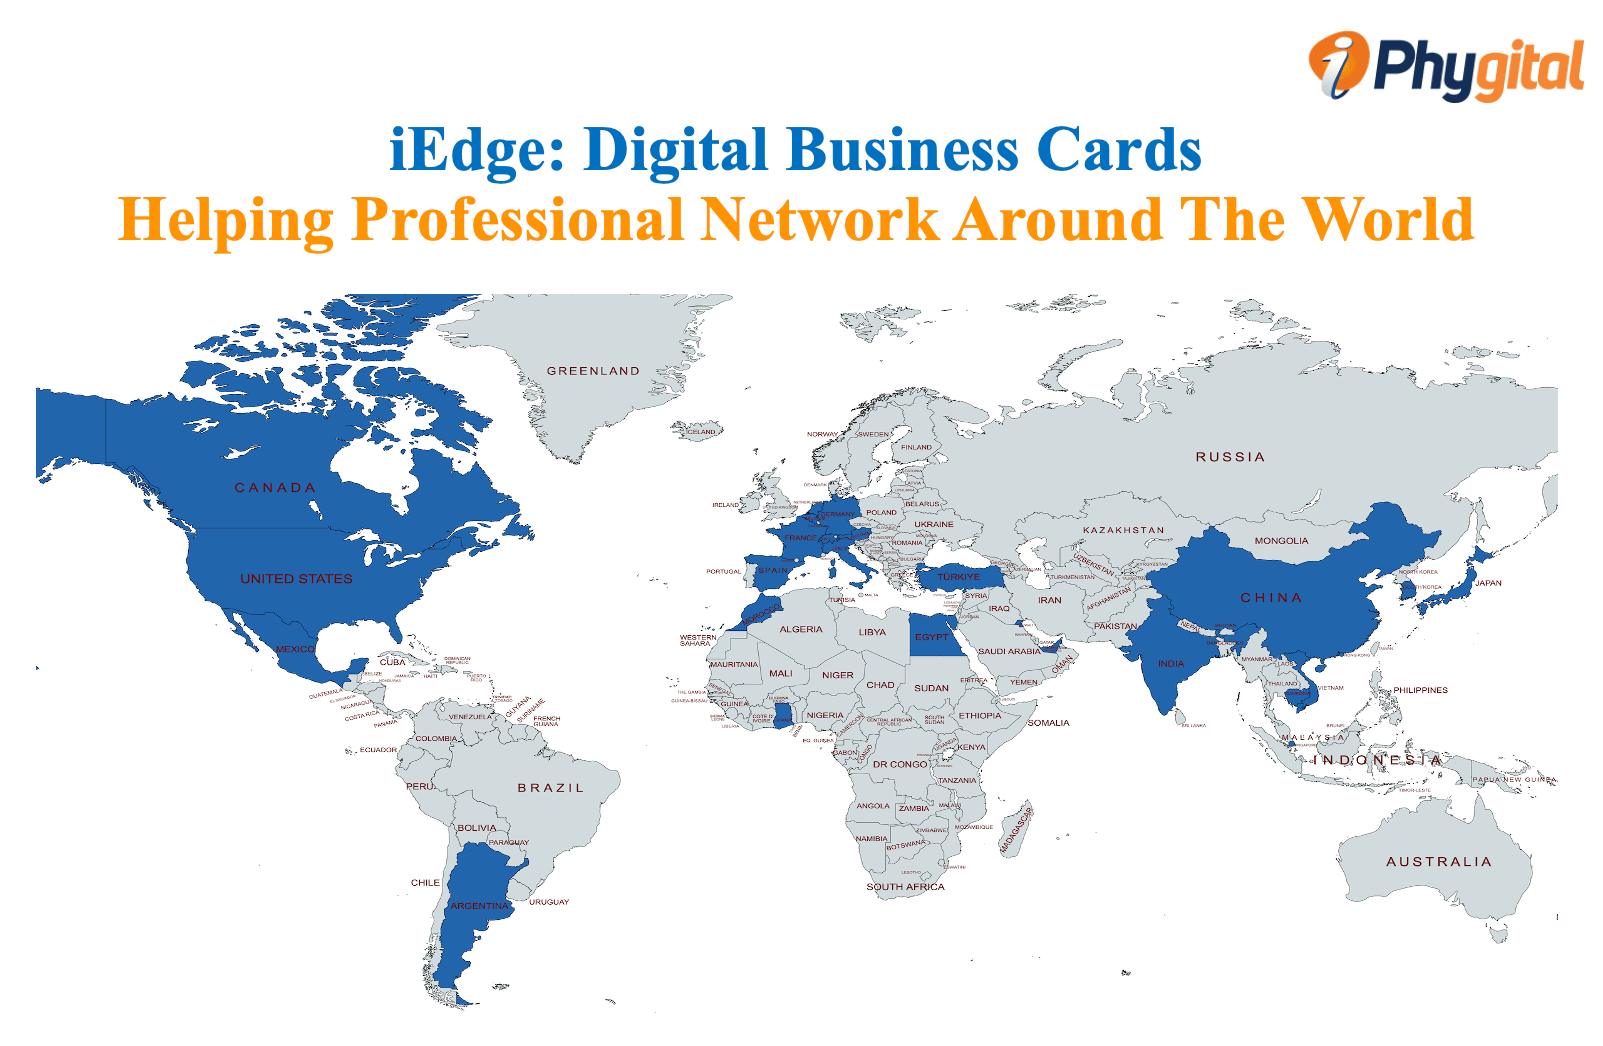 Worldwide iEdge Digital Business Cards Users  